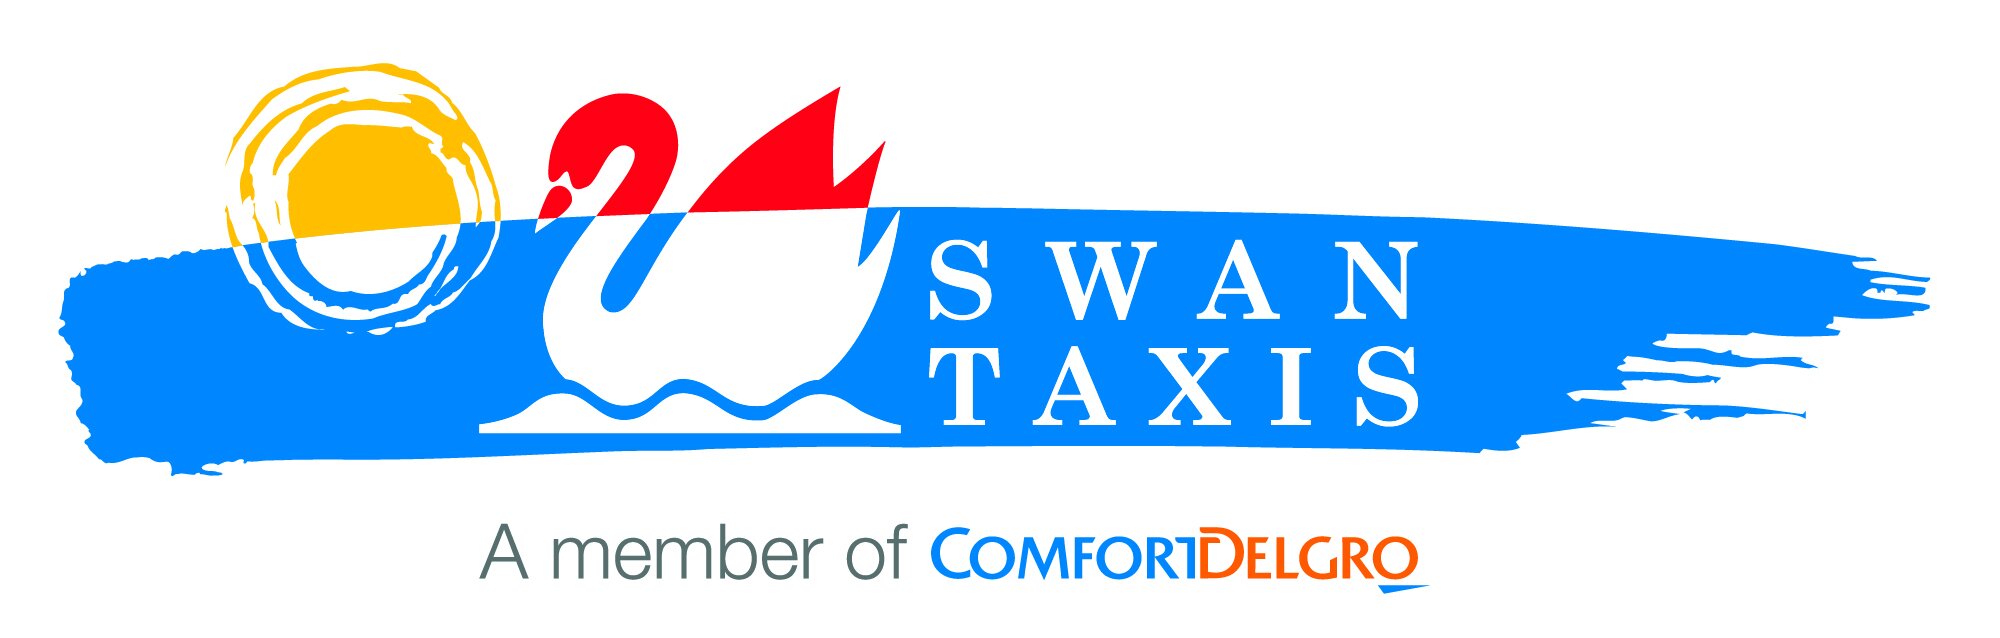 swan-taxis-logo-2020-2000px.jpg